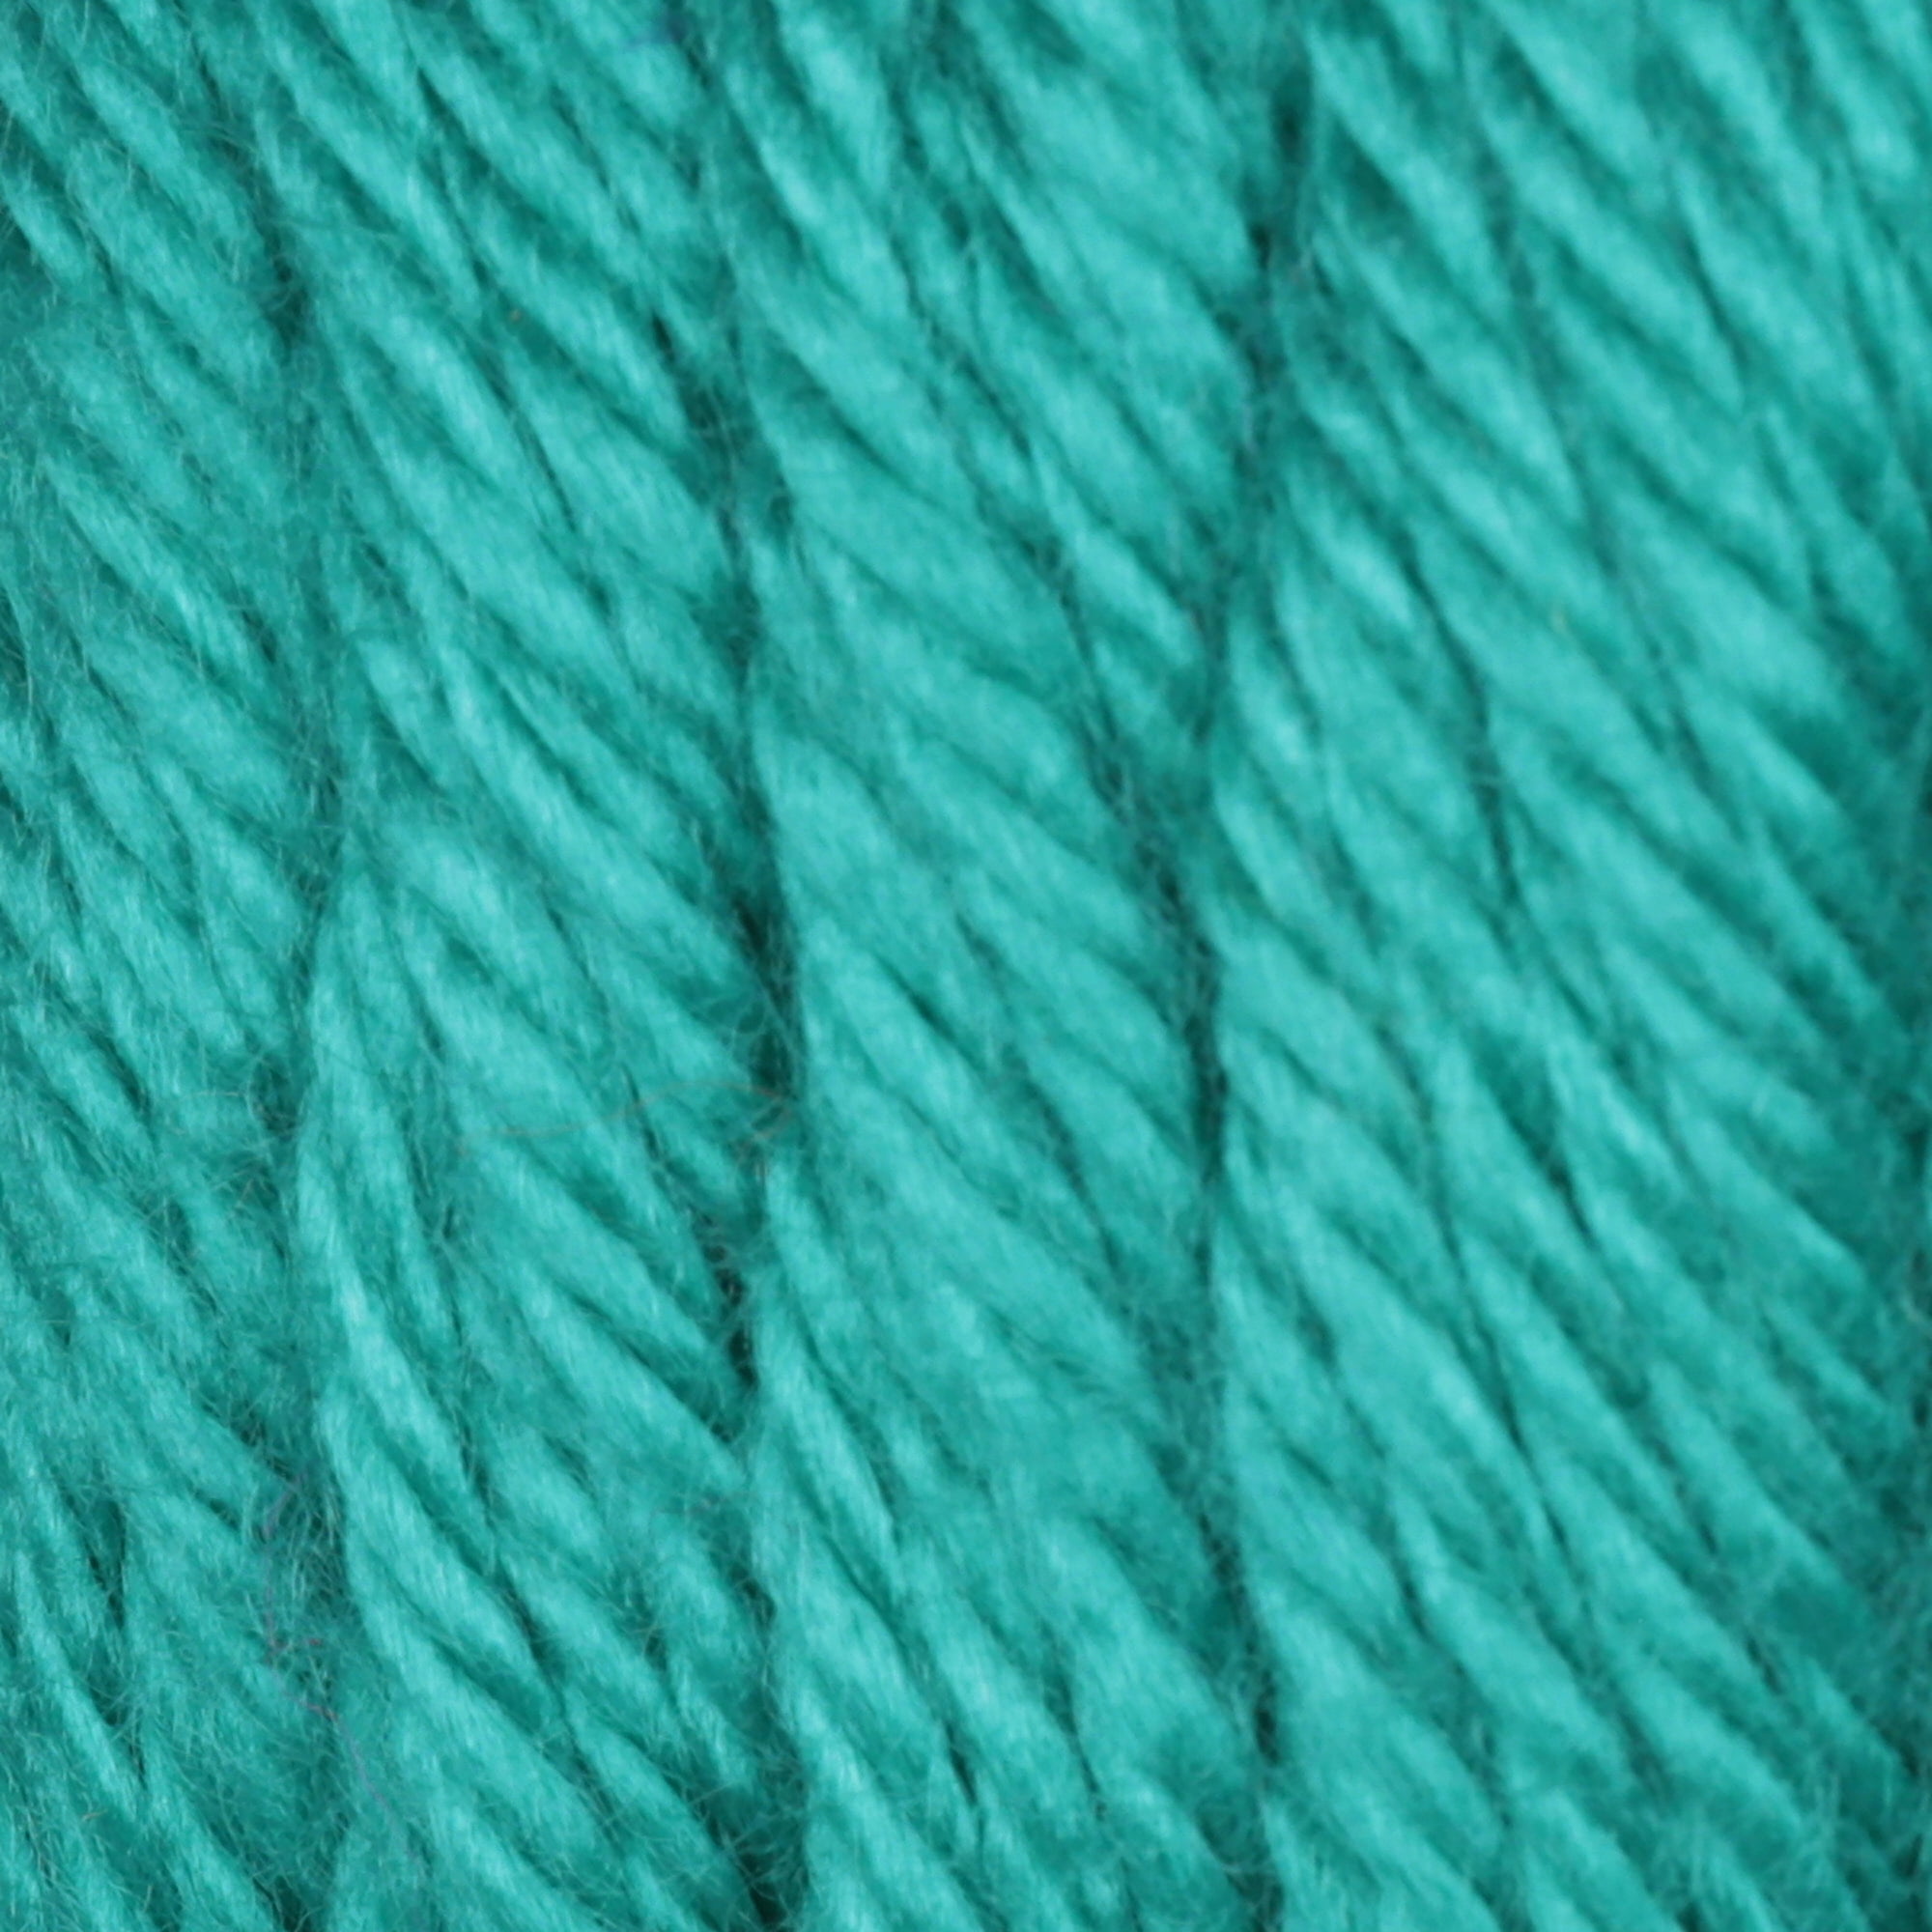 Caron Simply Soft Sage Yarn - 3 Pack Of 170g/6oz - Acrylic - 4